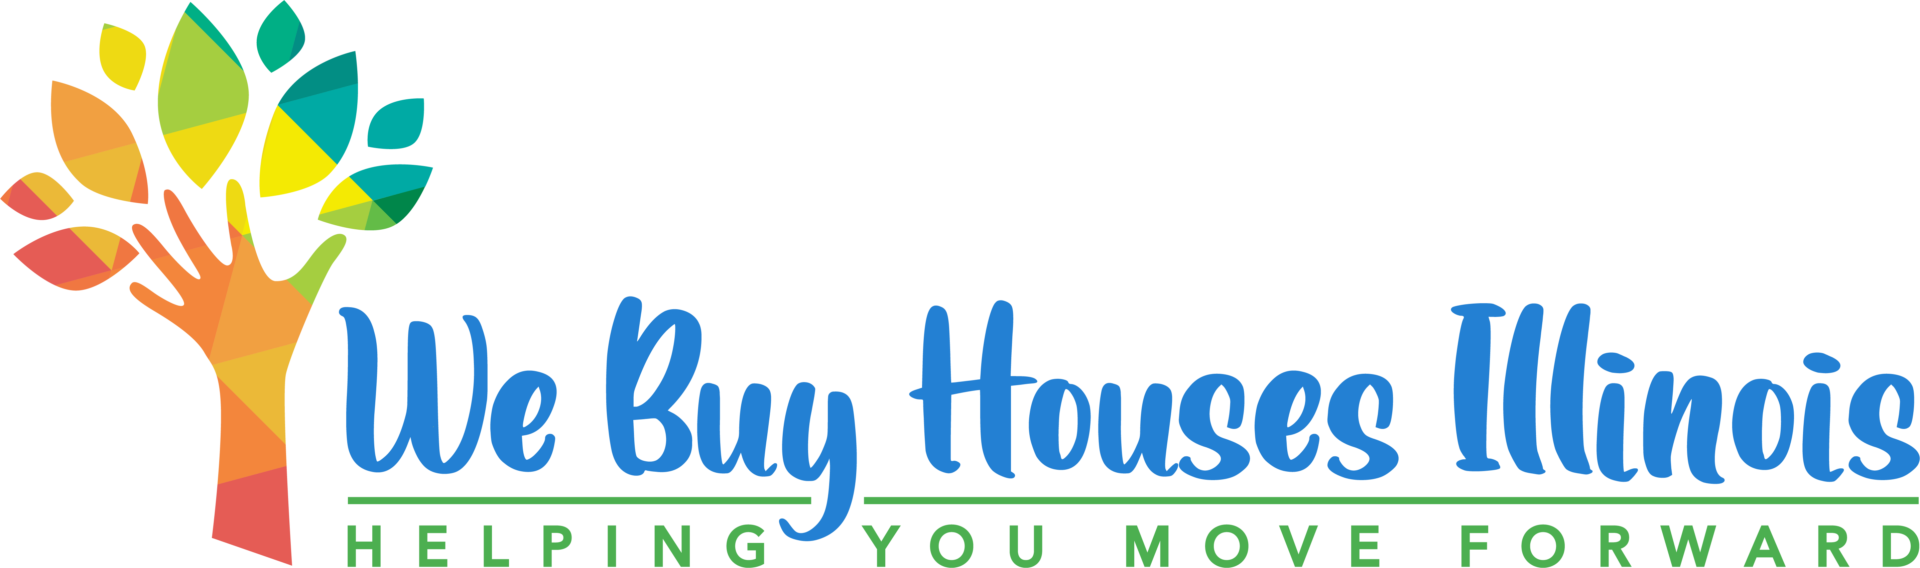 We Buy Houses Illinois logo